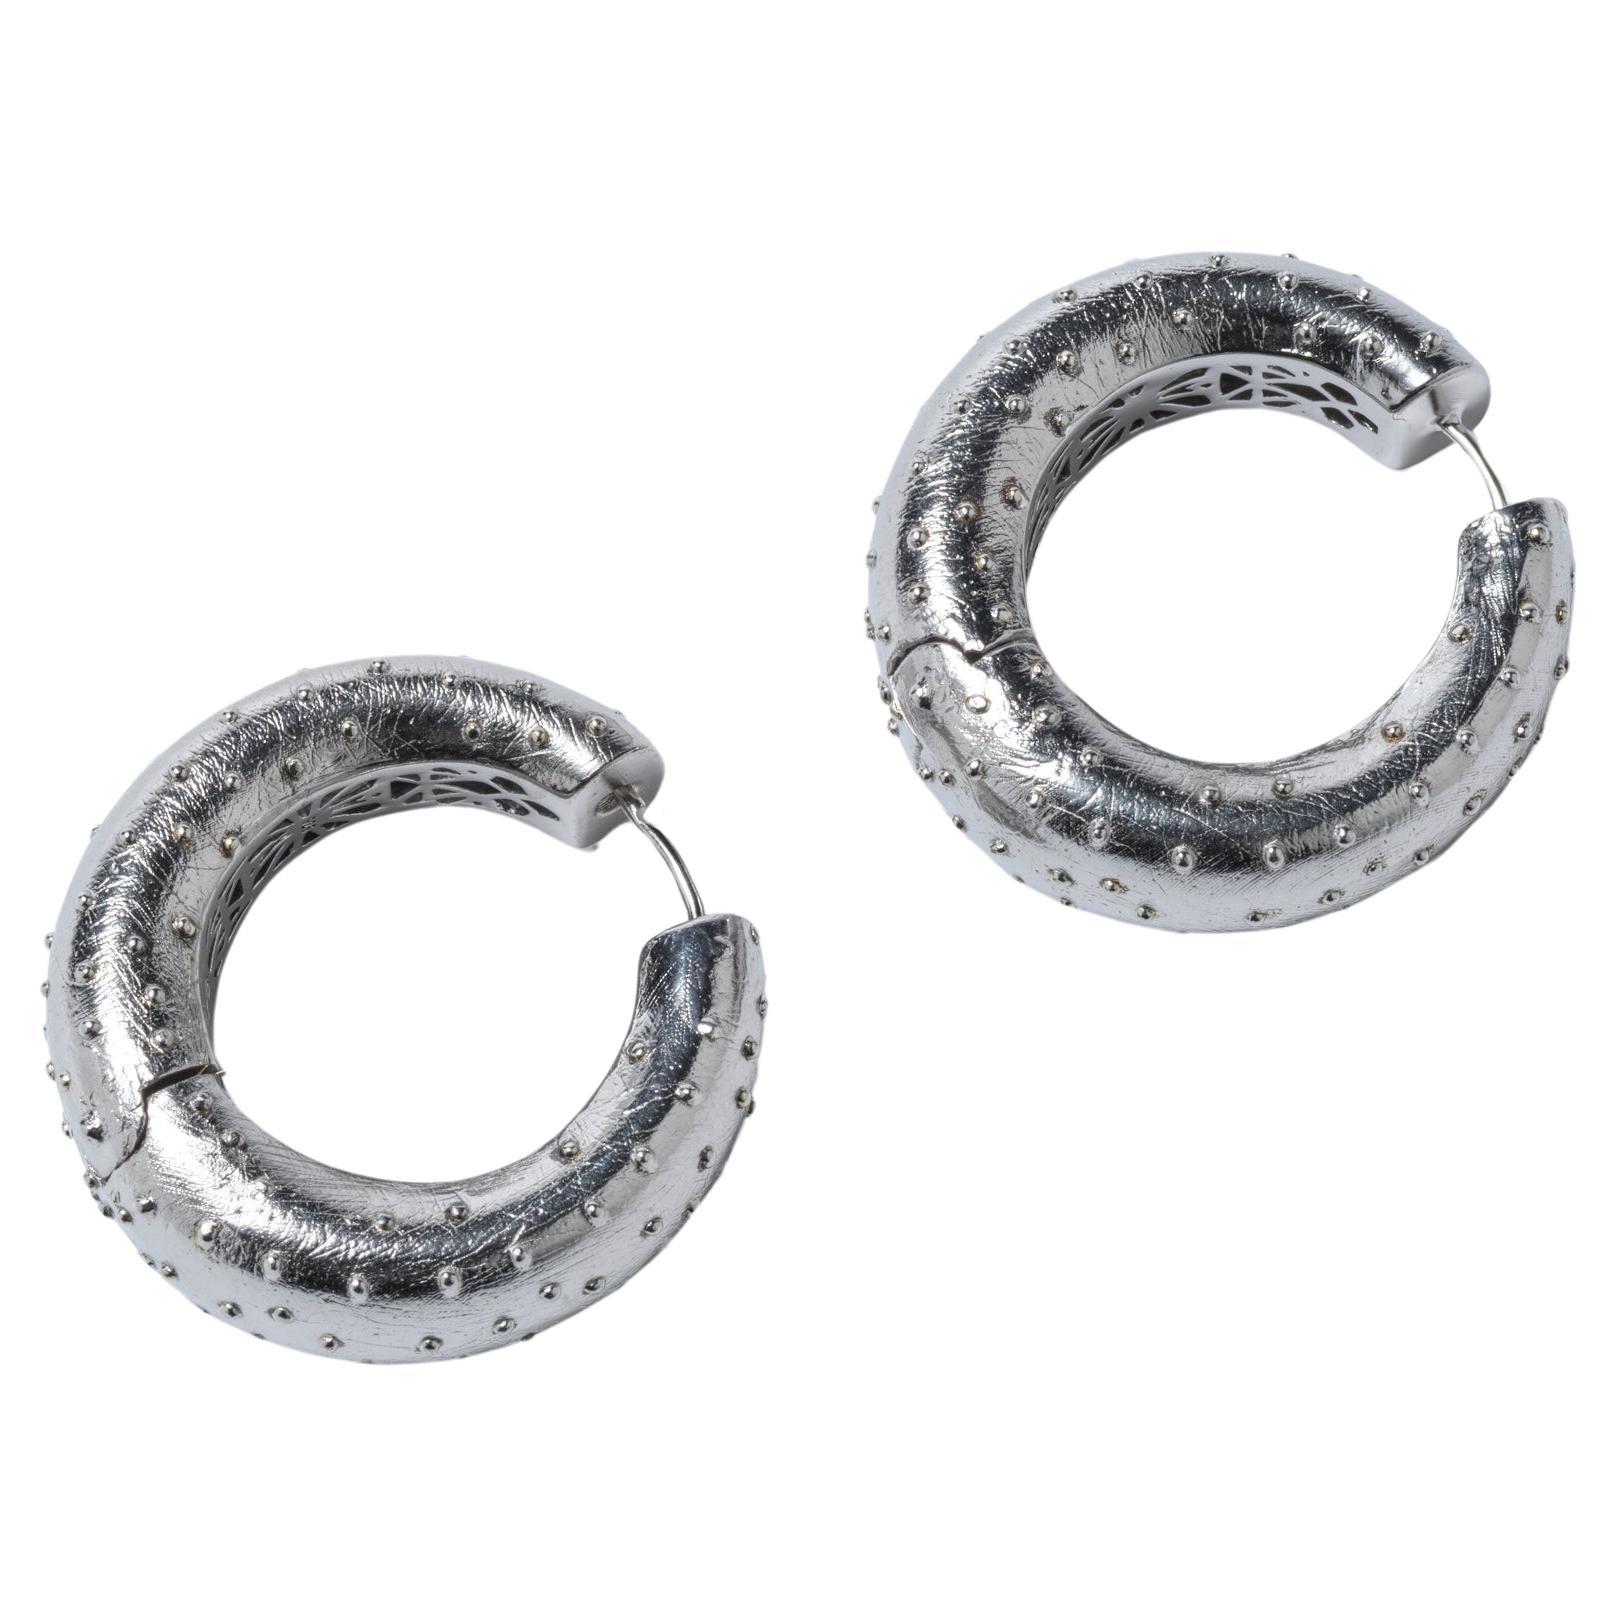 Pair of silver ear rings by Swedish designer Paula Pantolin.